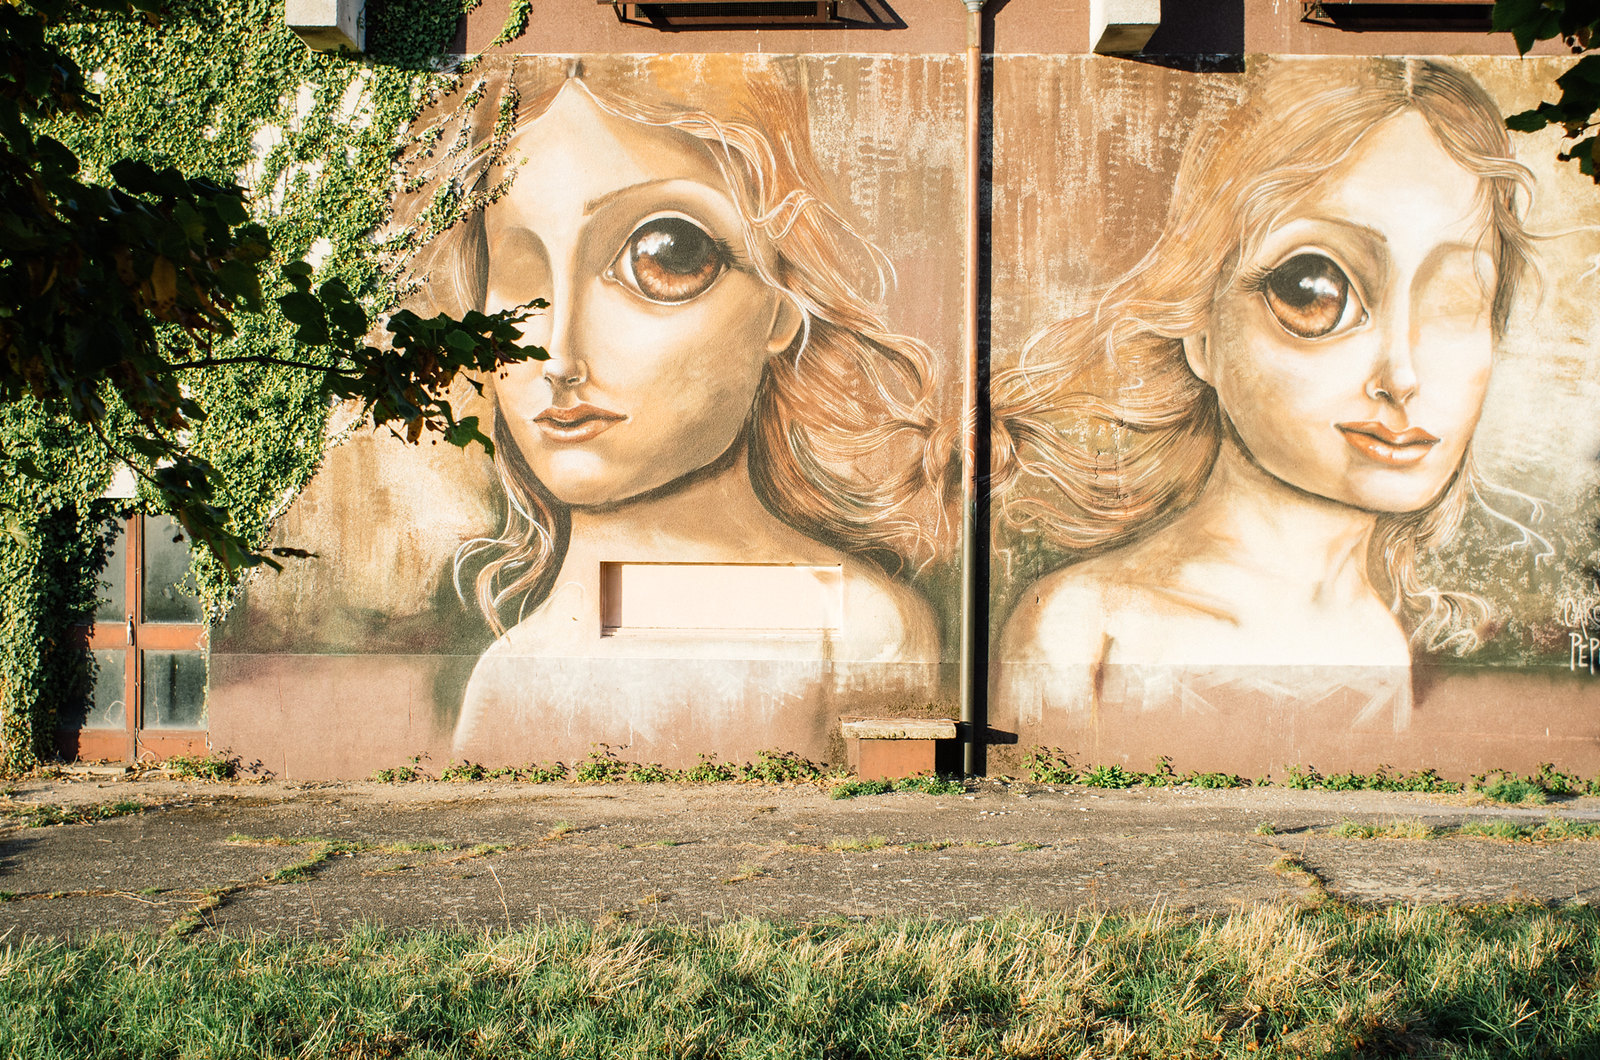 Street art city, paradis du street art - Carnet de voyage en France